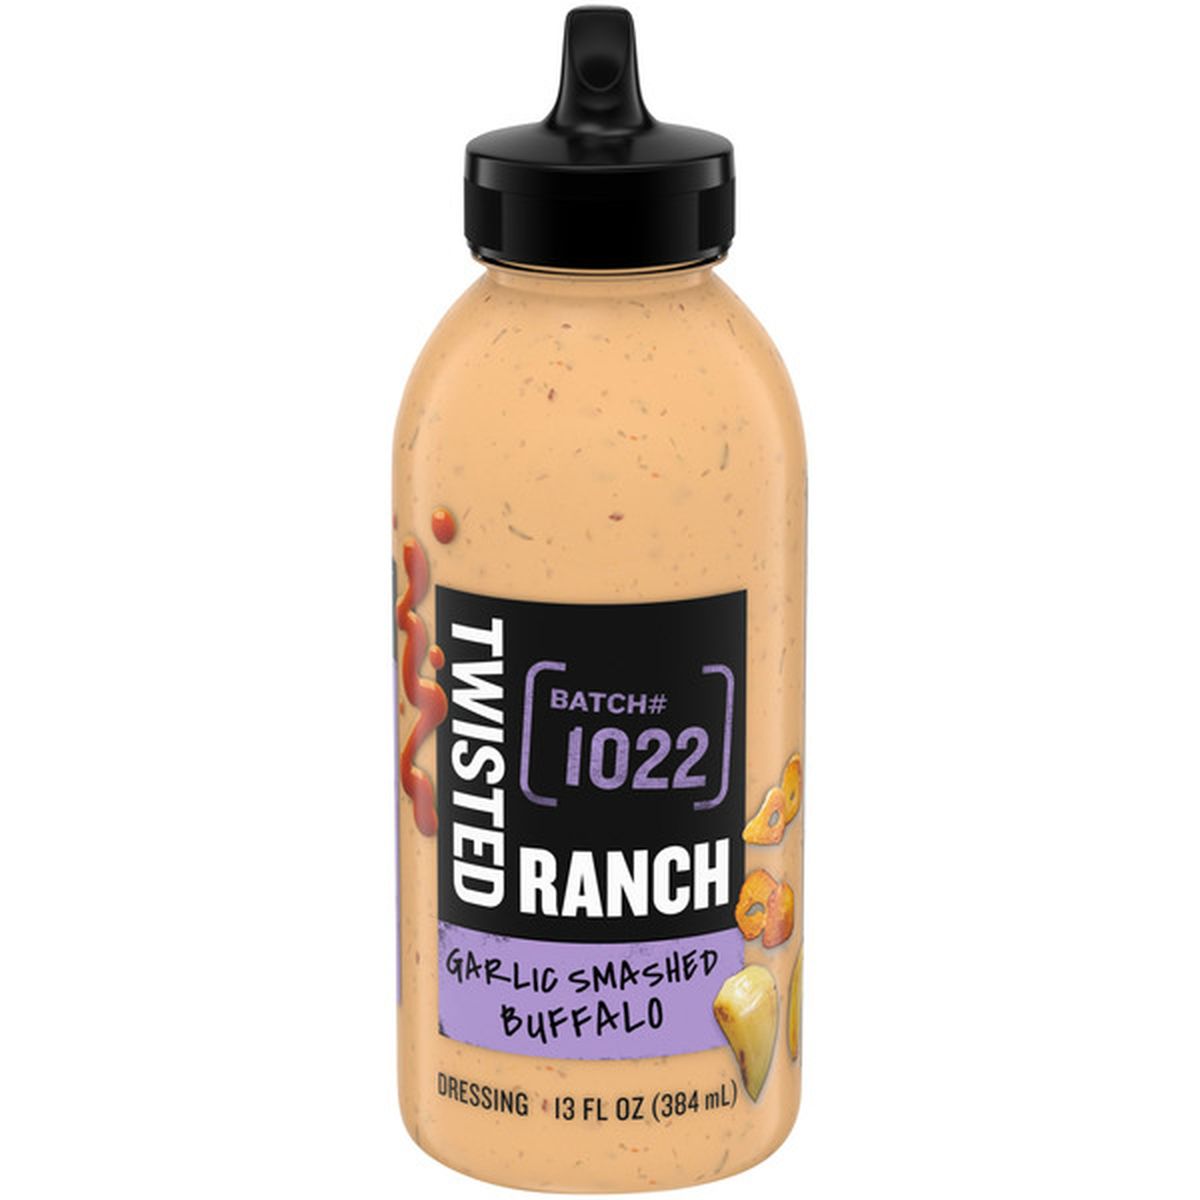 Twisted Ranch Garlic Smashed Buffalo Sauce & Dressing (13 fl oz